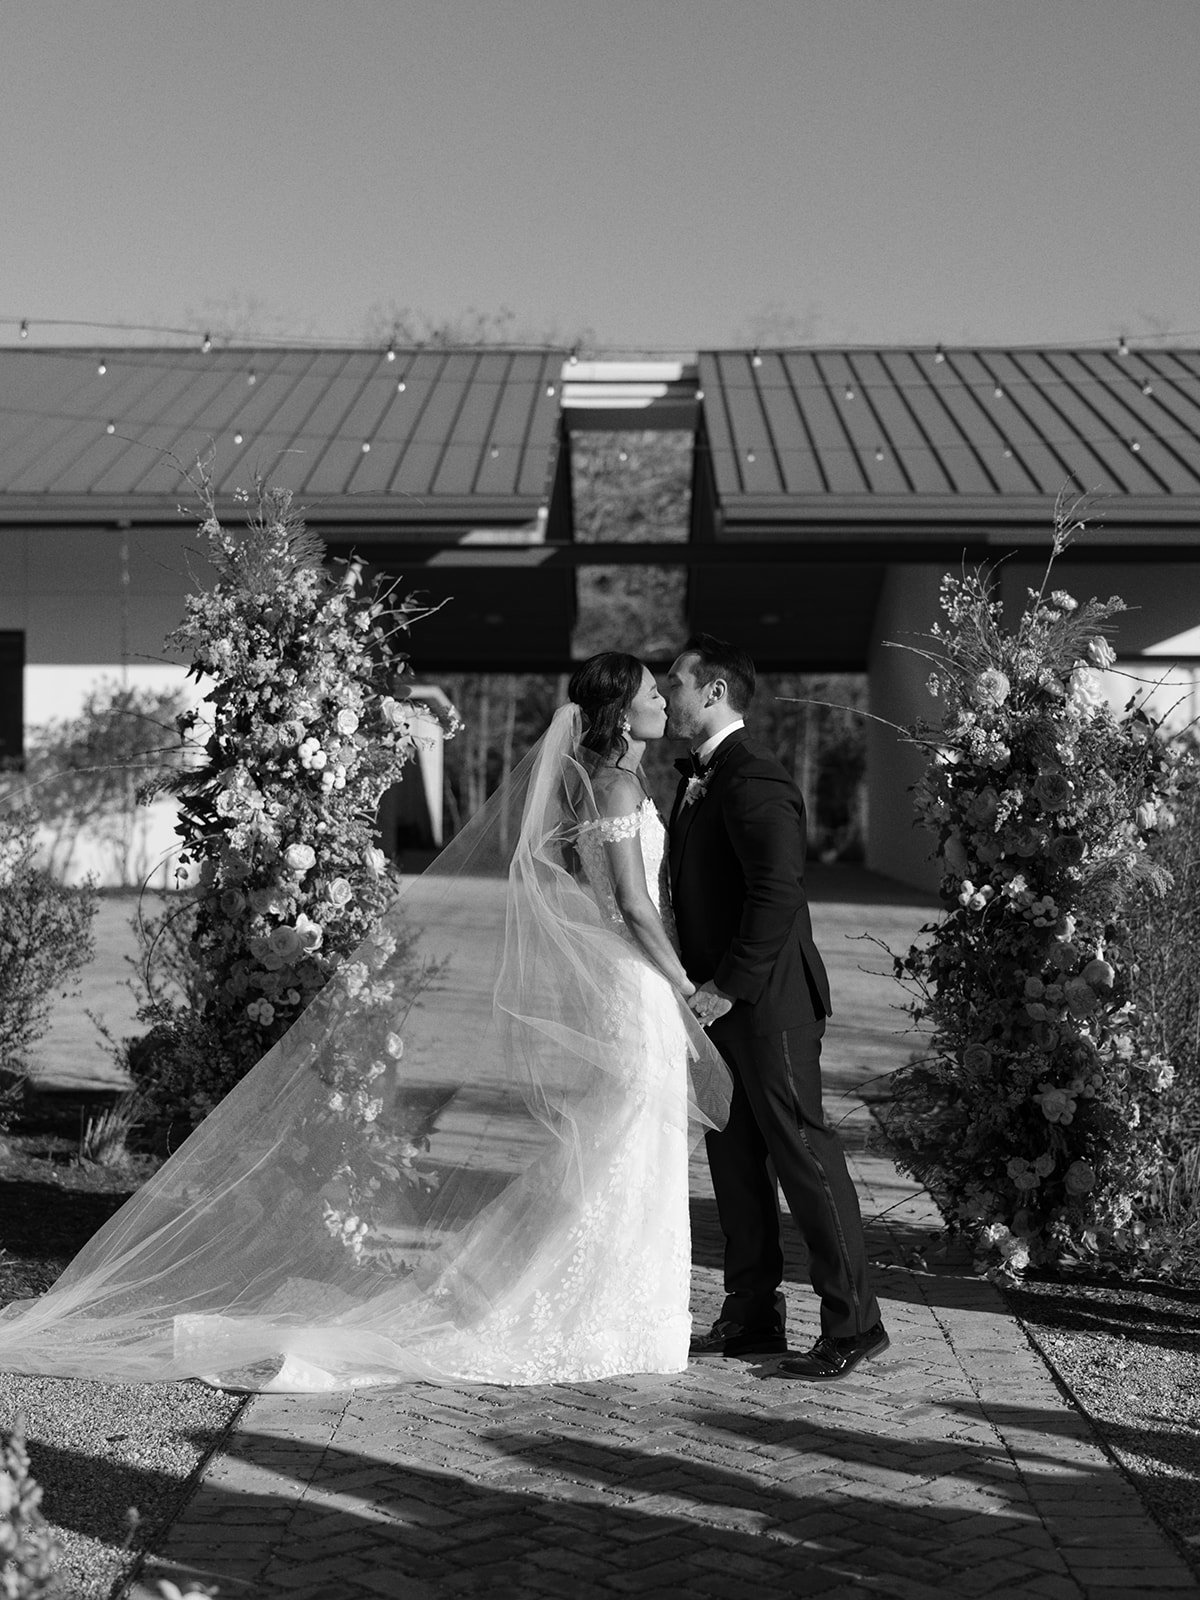 Best-Austin-Wedding-Photographers-Elopement-Film-35mm-Asheville-Santa-Barbara-Grand-Lady-119.jpg